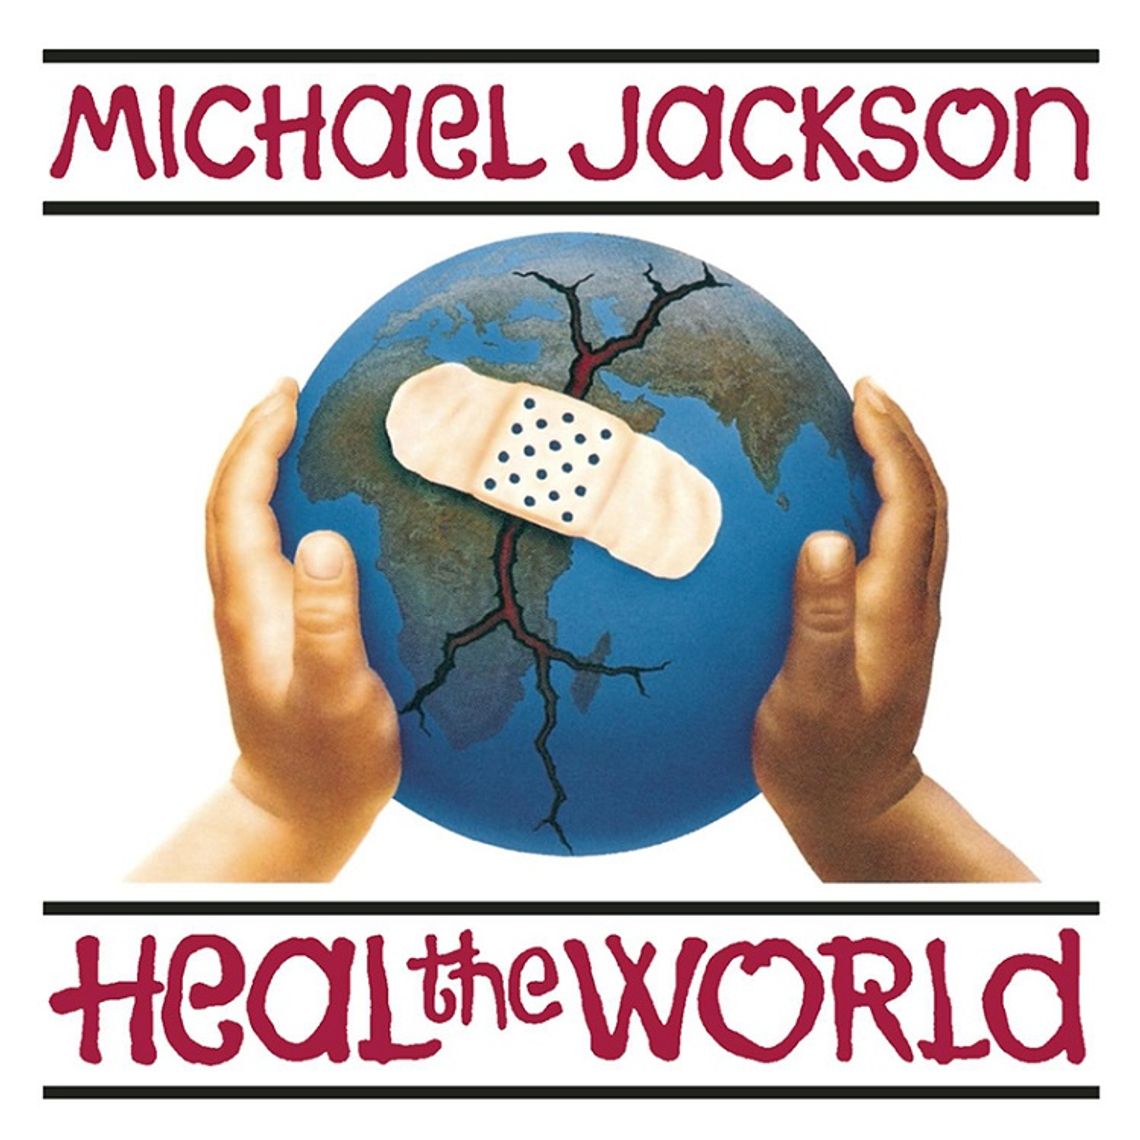 MICHAEL JACKSON "Heal the world"